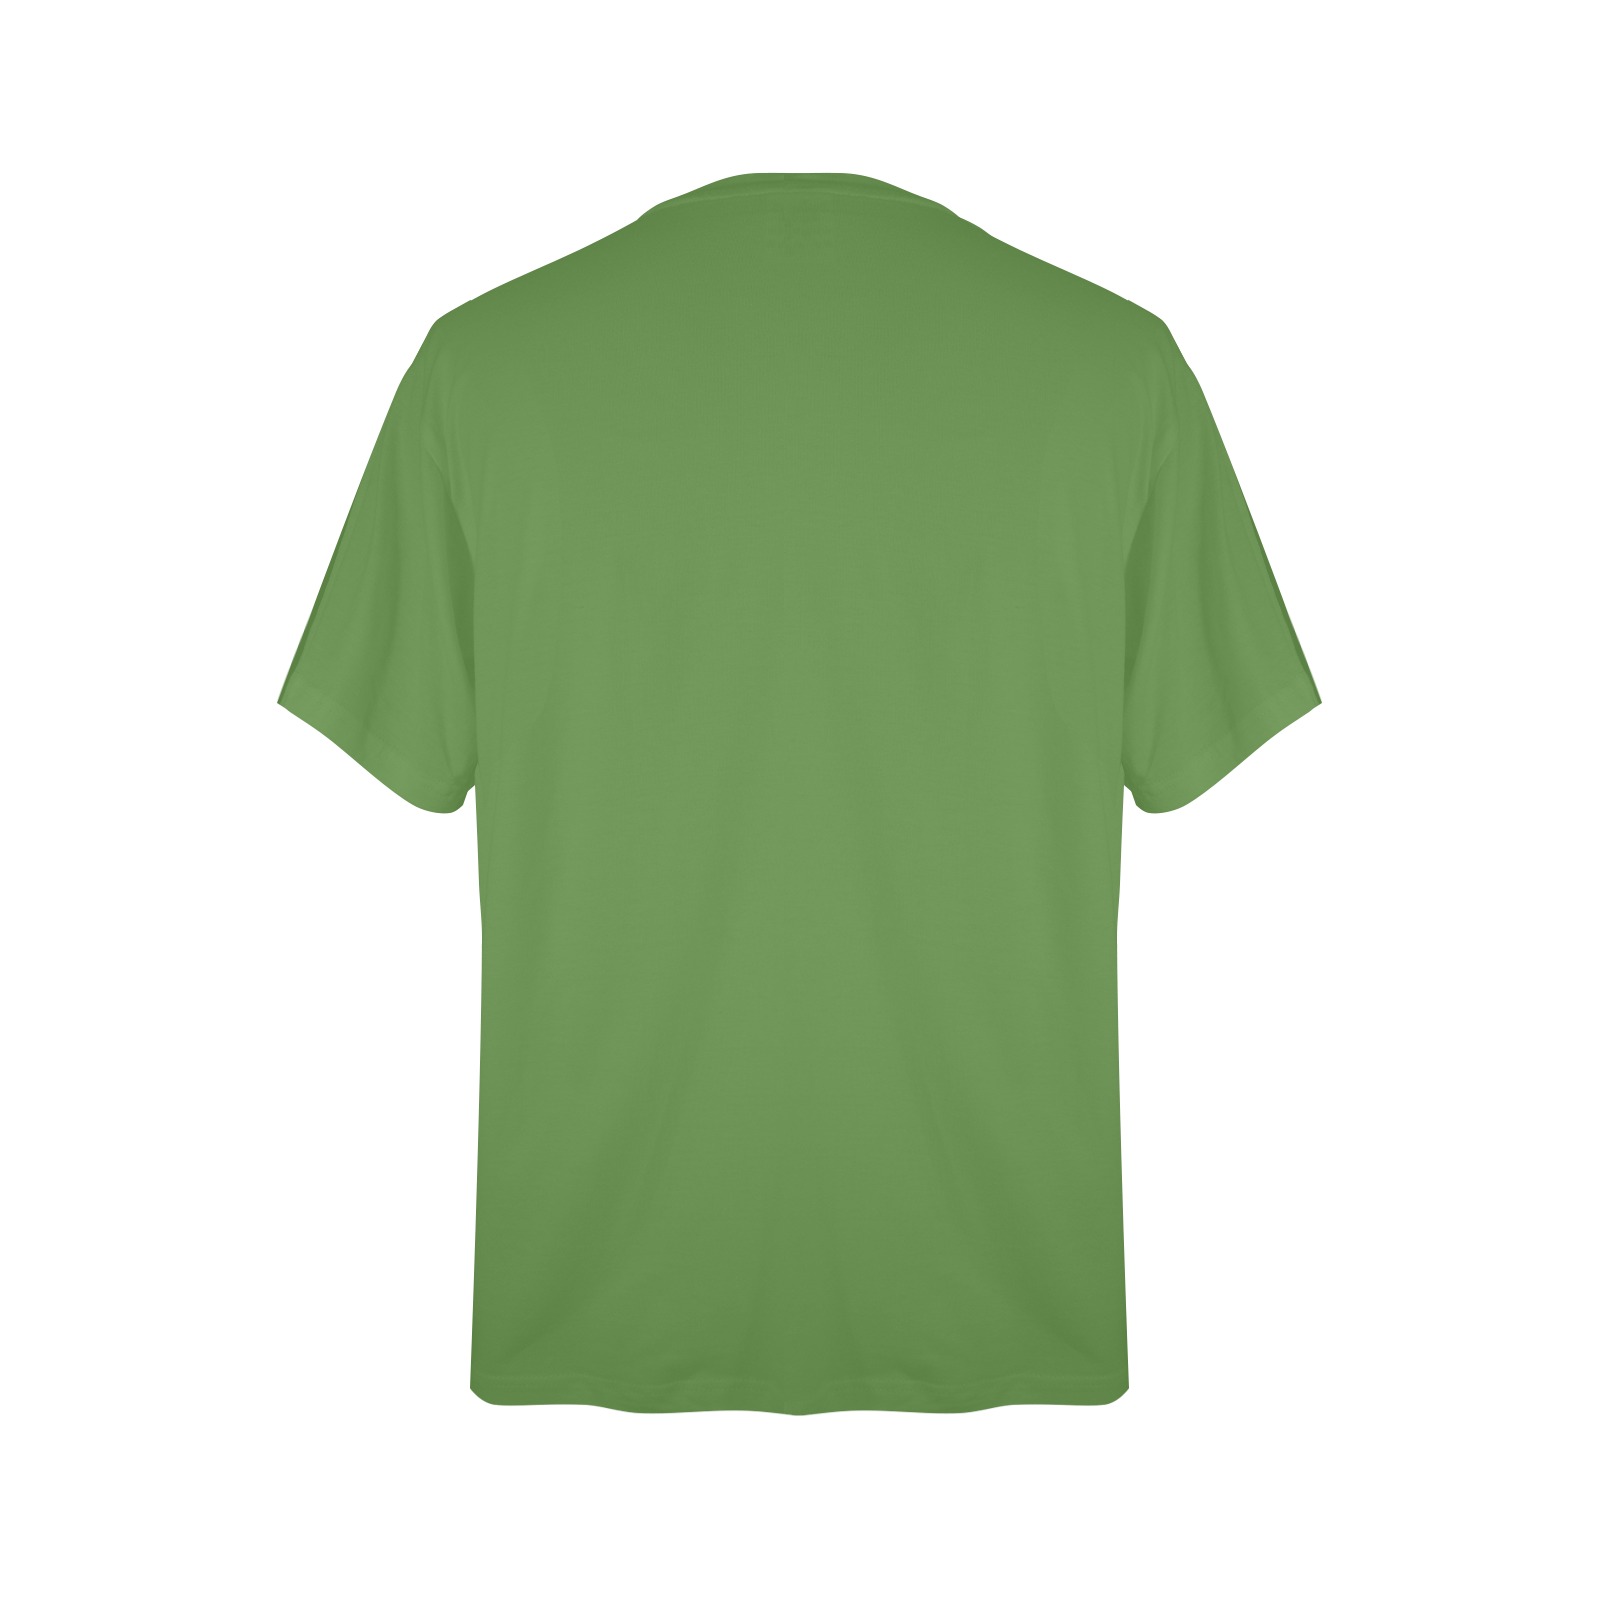 Jerusalem dechire vert Men's Glow in the Dark T-shirt (Front Printing)